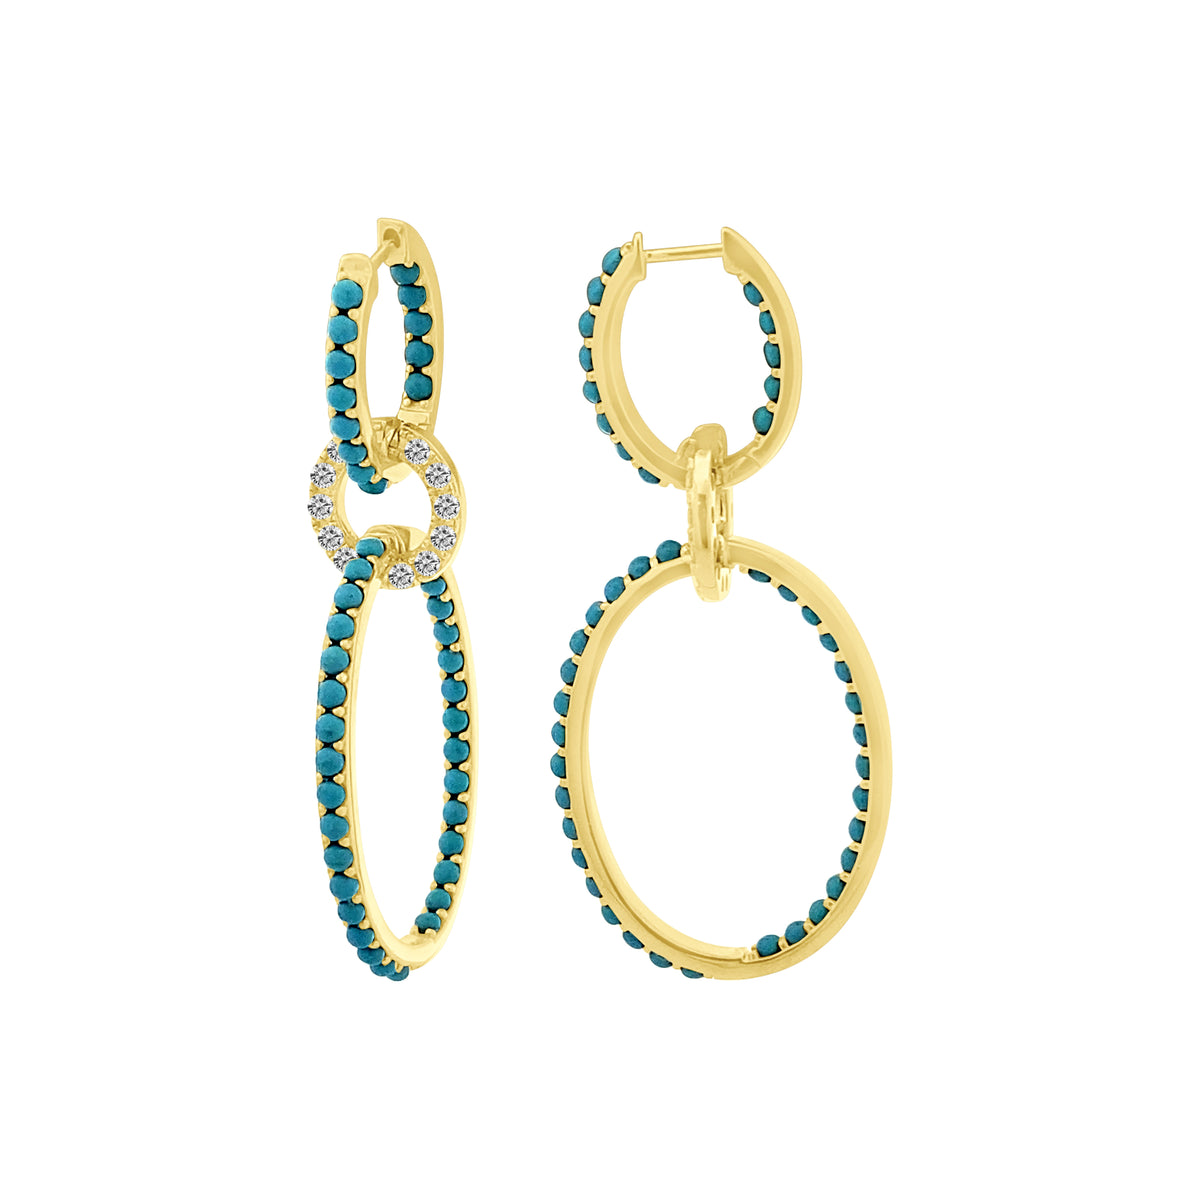 Turquoise Linked Earrings